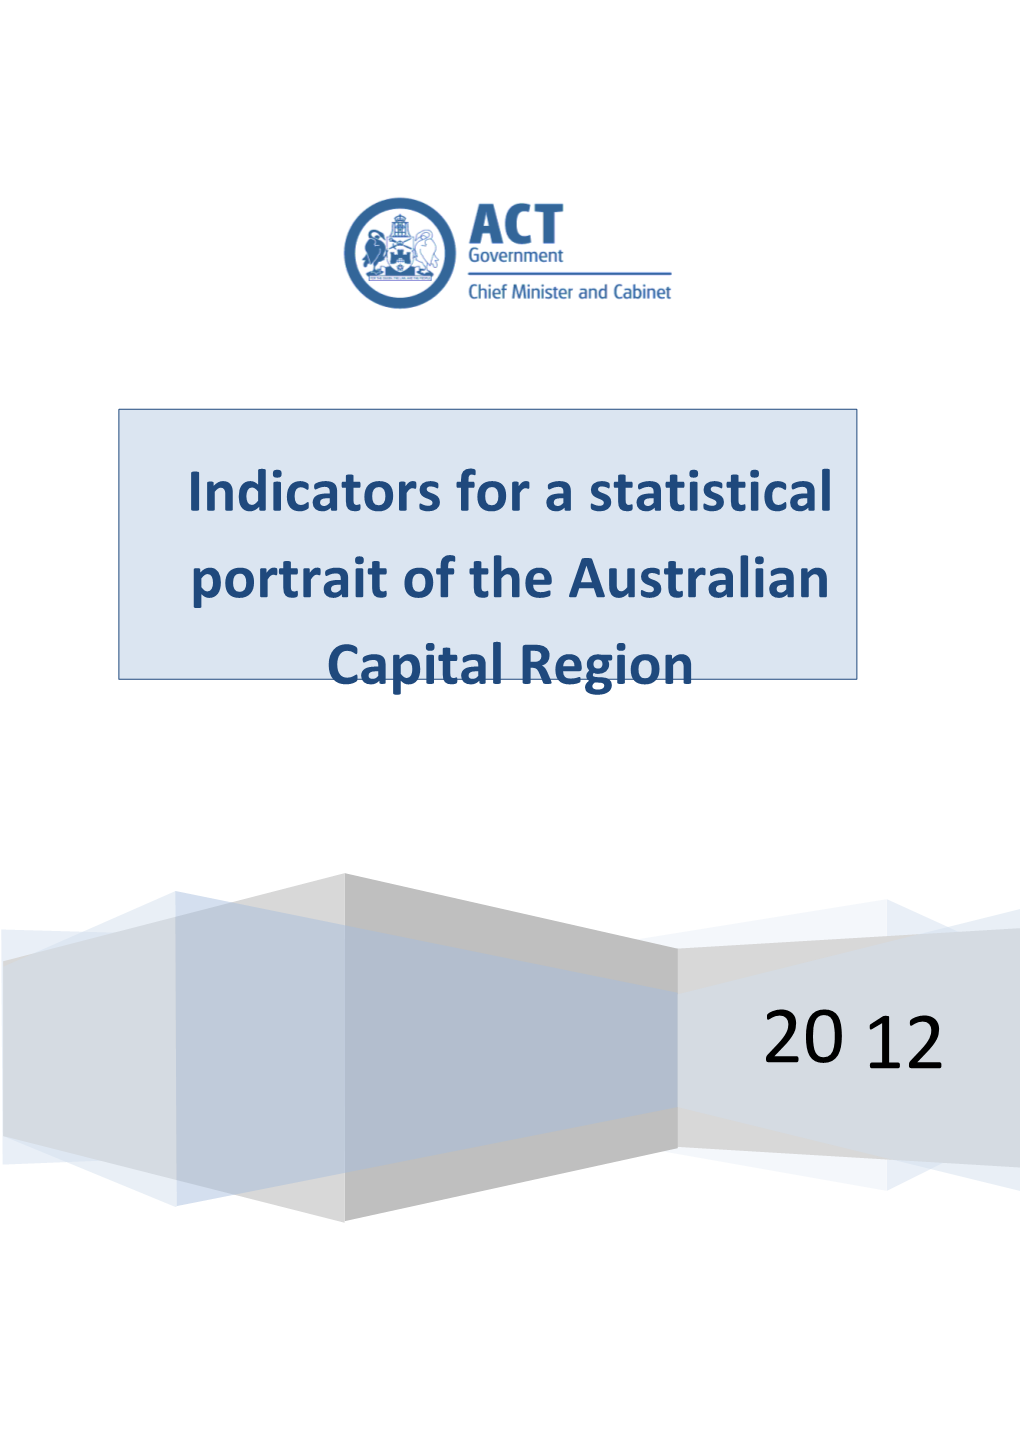 Indicators for a Statistical Portrait of the Australian Capital Region